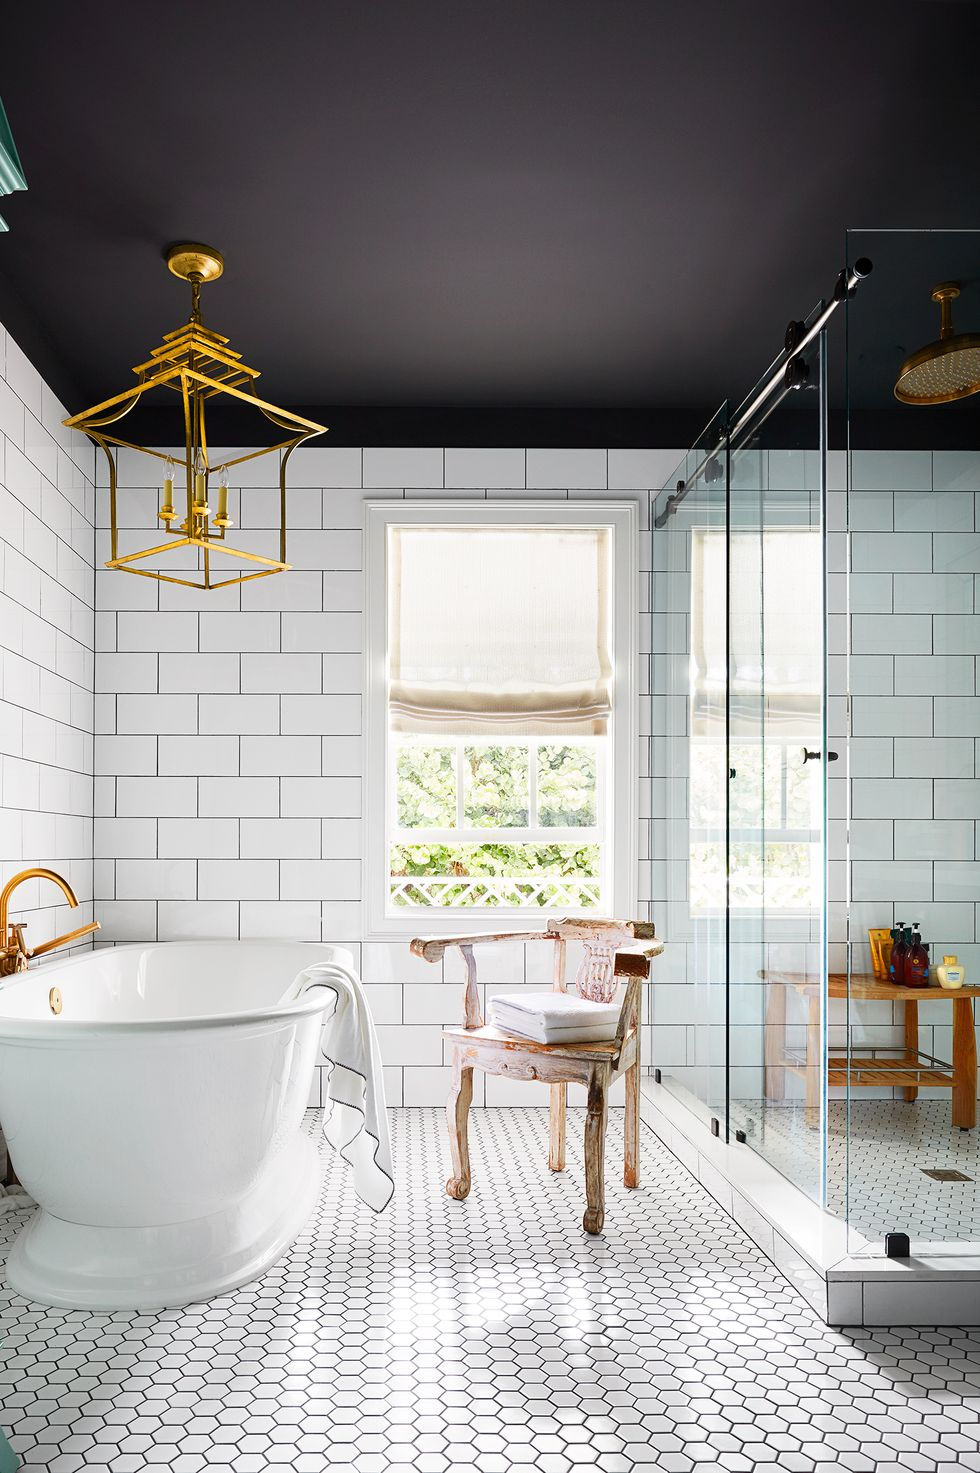 Ceiling Bathroom Innovative Design Solution for Small Bathrooms – Space-Saving Overhead Shower Installation